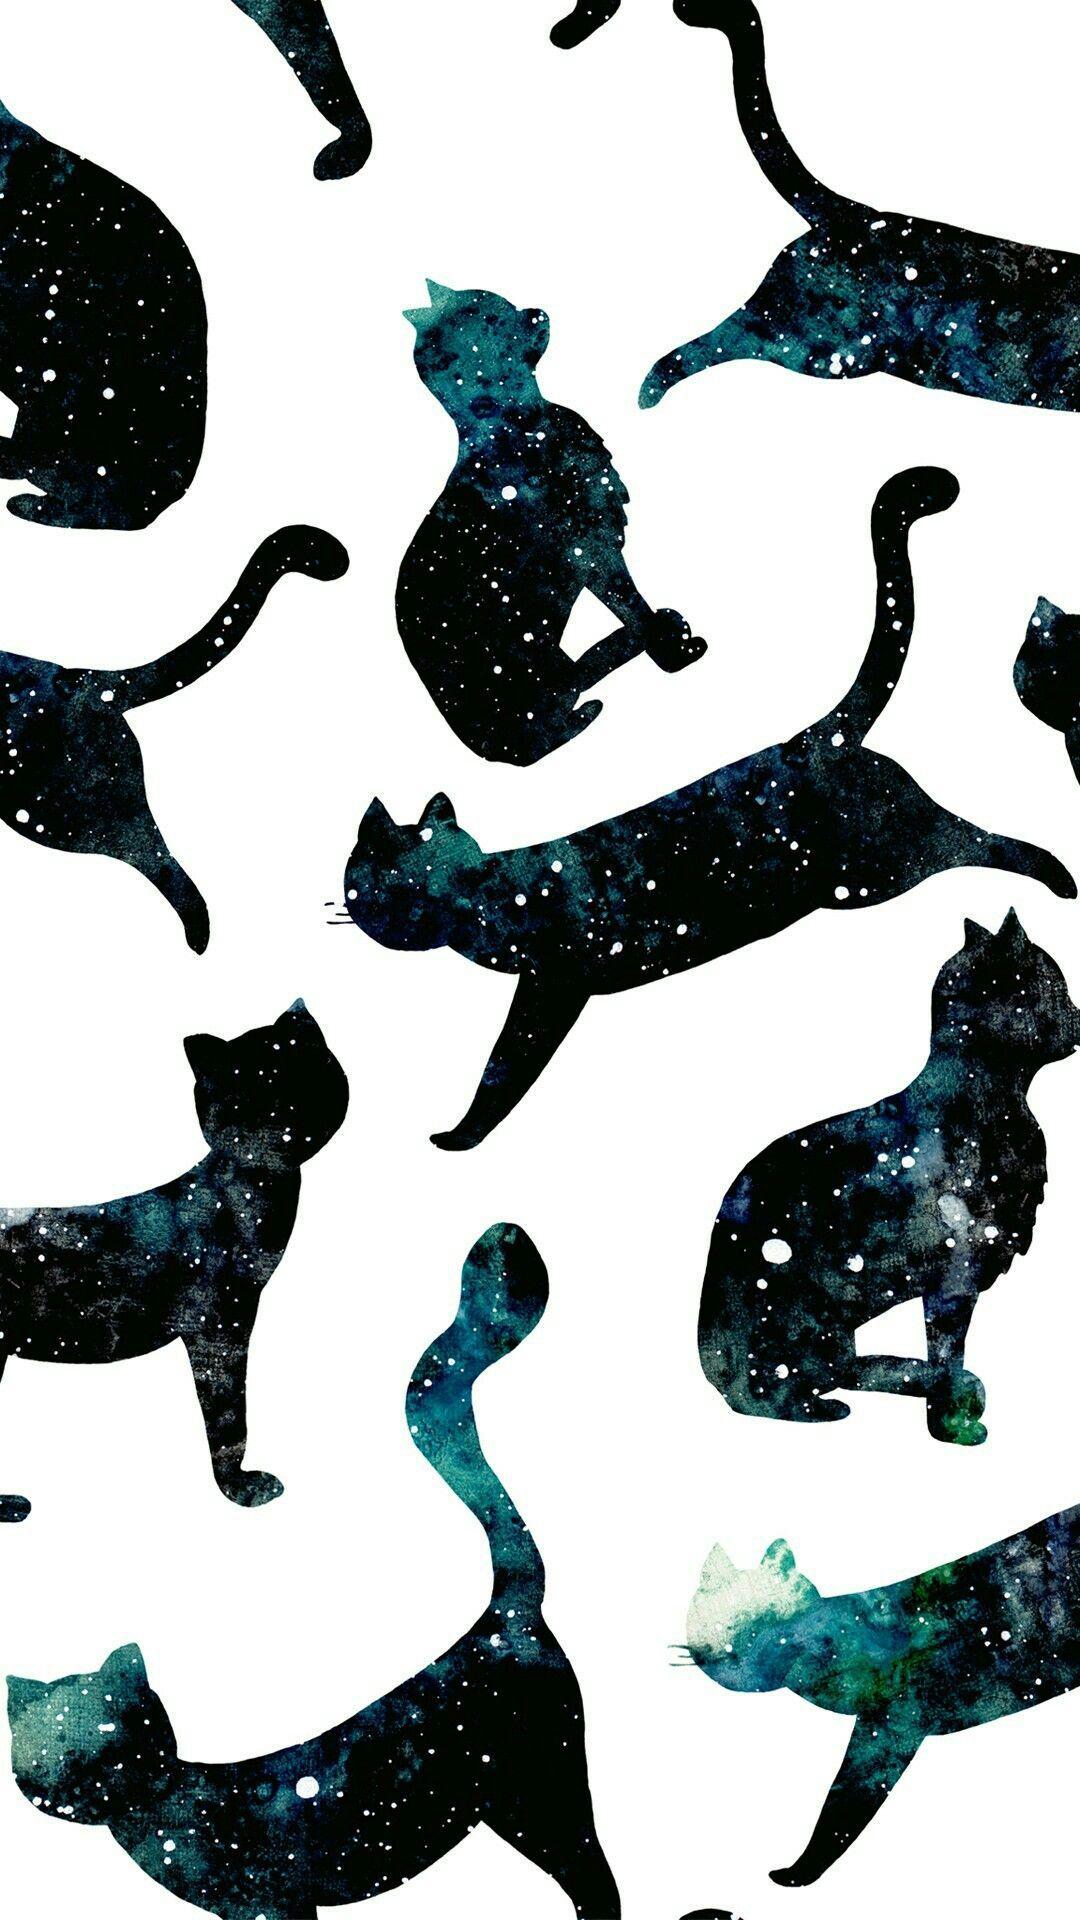 Wallpaper, cat, Galaxy. Neko wall paper ideation